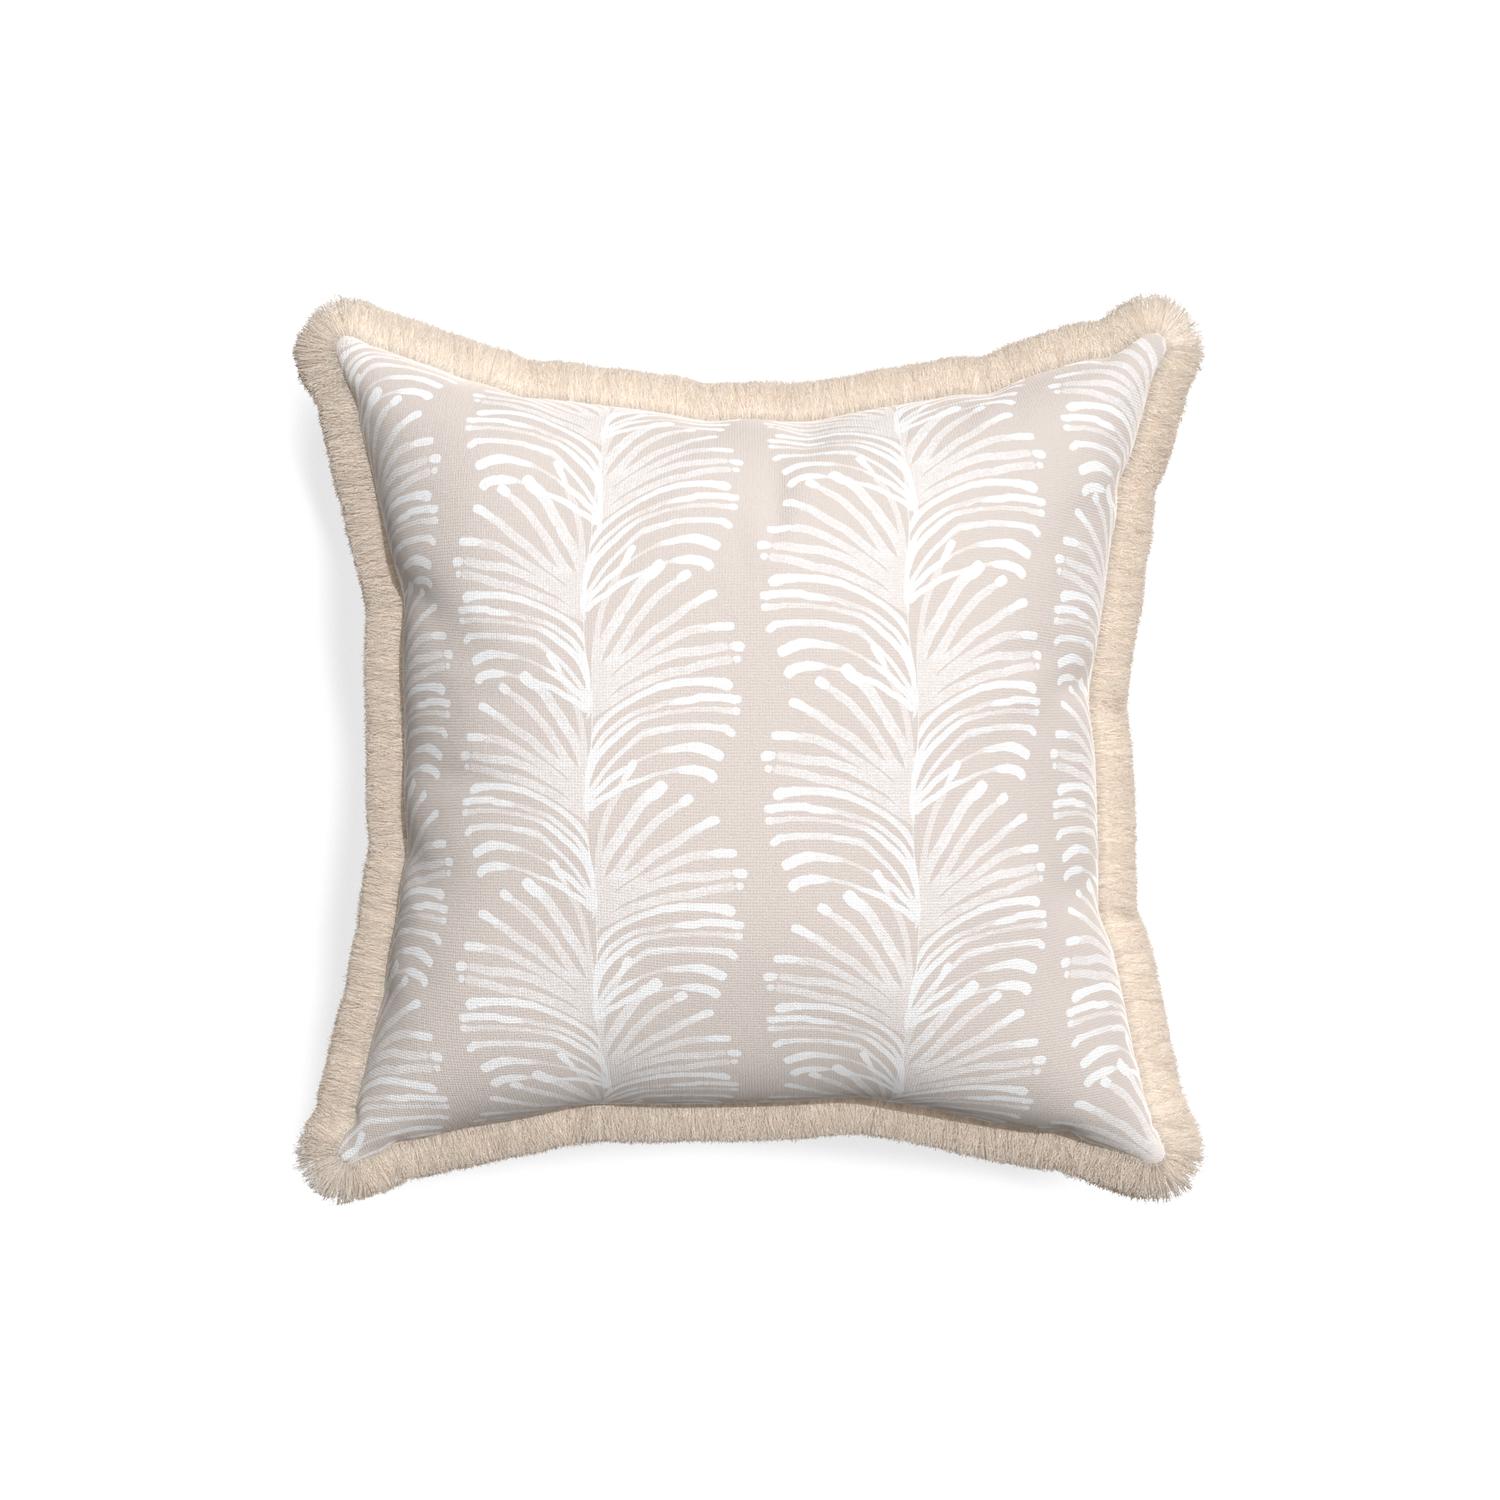 18-square emma sand custom pillow with cream fringe on white background